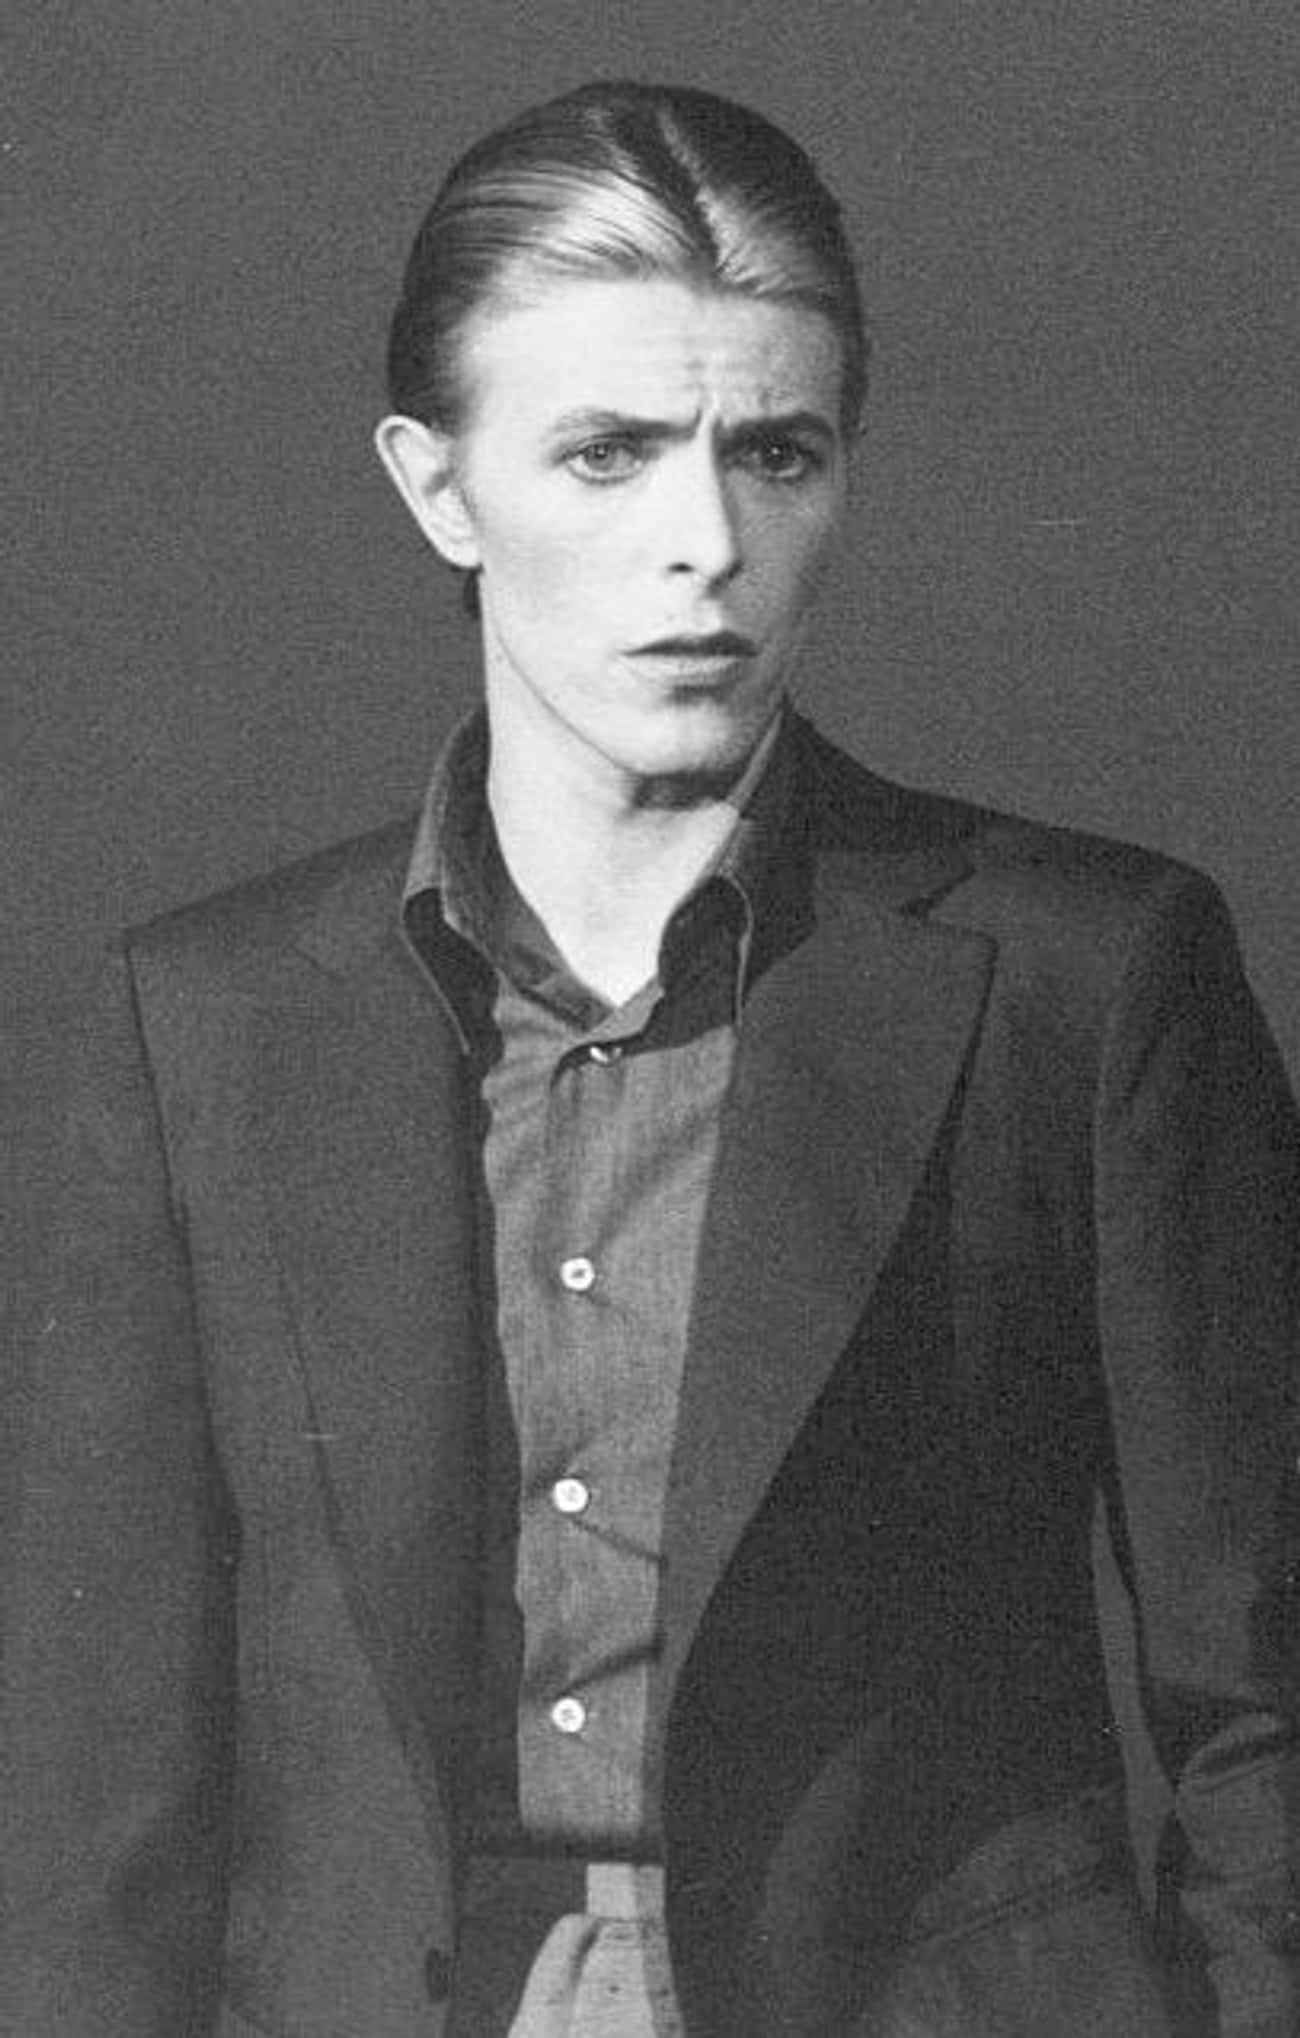 David Bowie: Shepherd's Pie